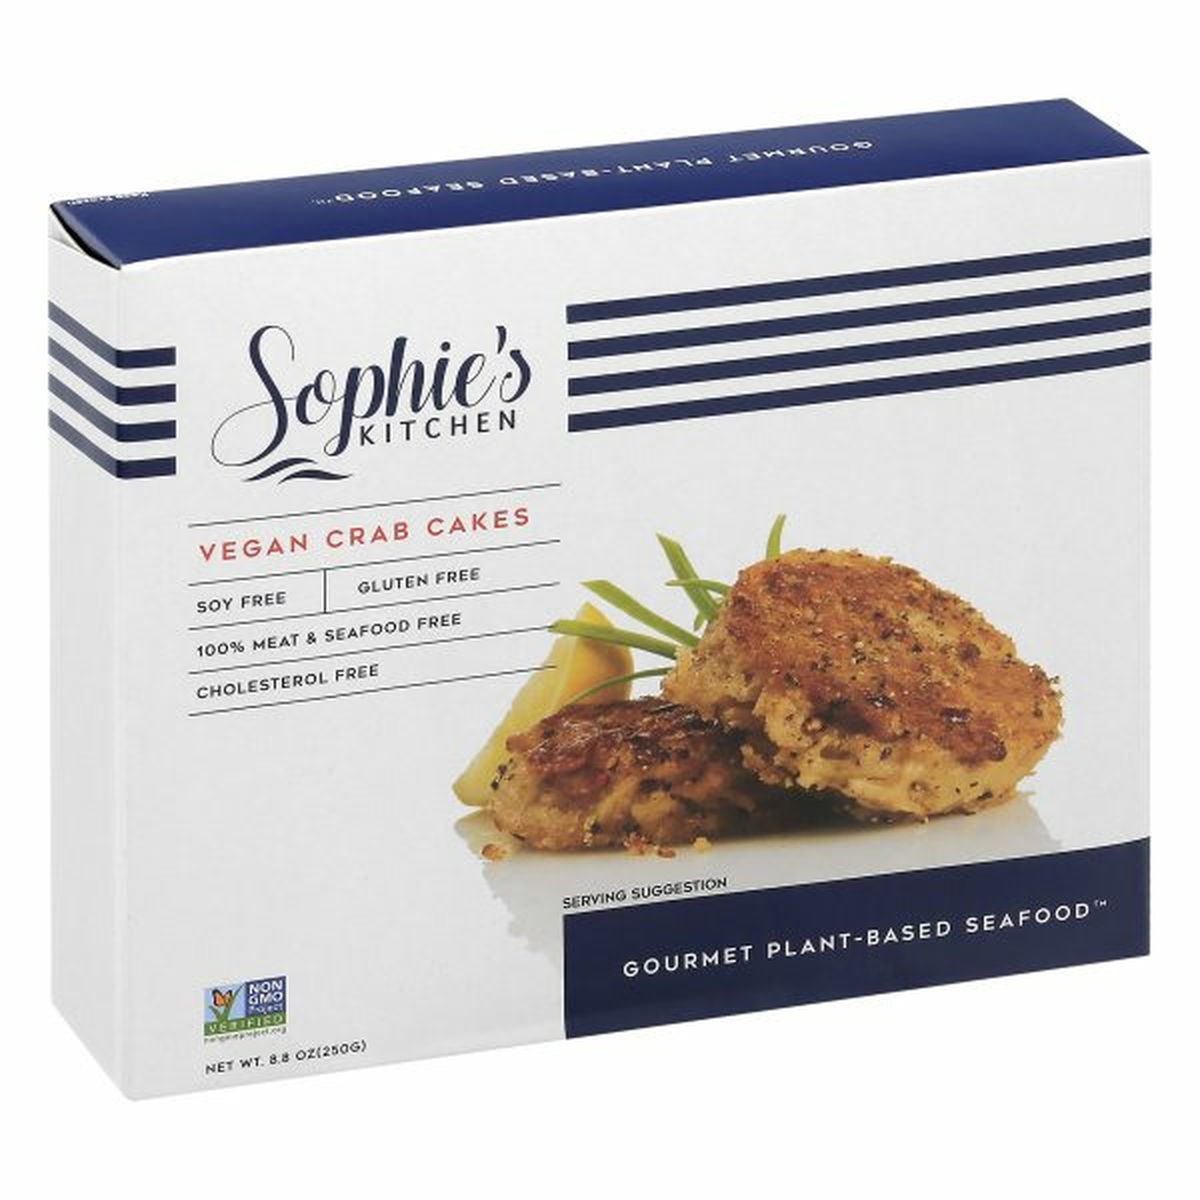 Calories in Sophie's Kitchen Crab Cakes, Vegan